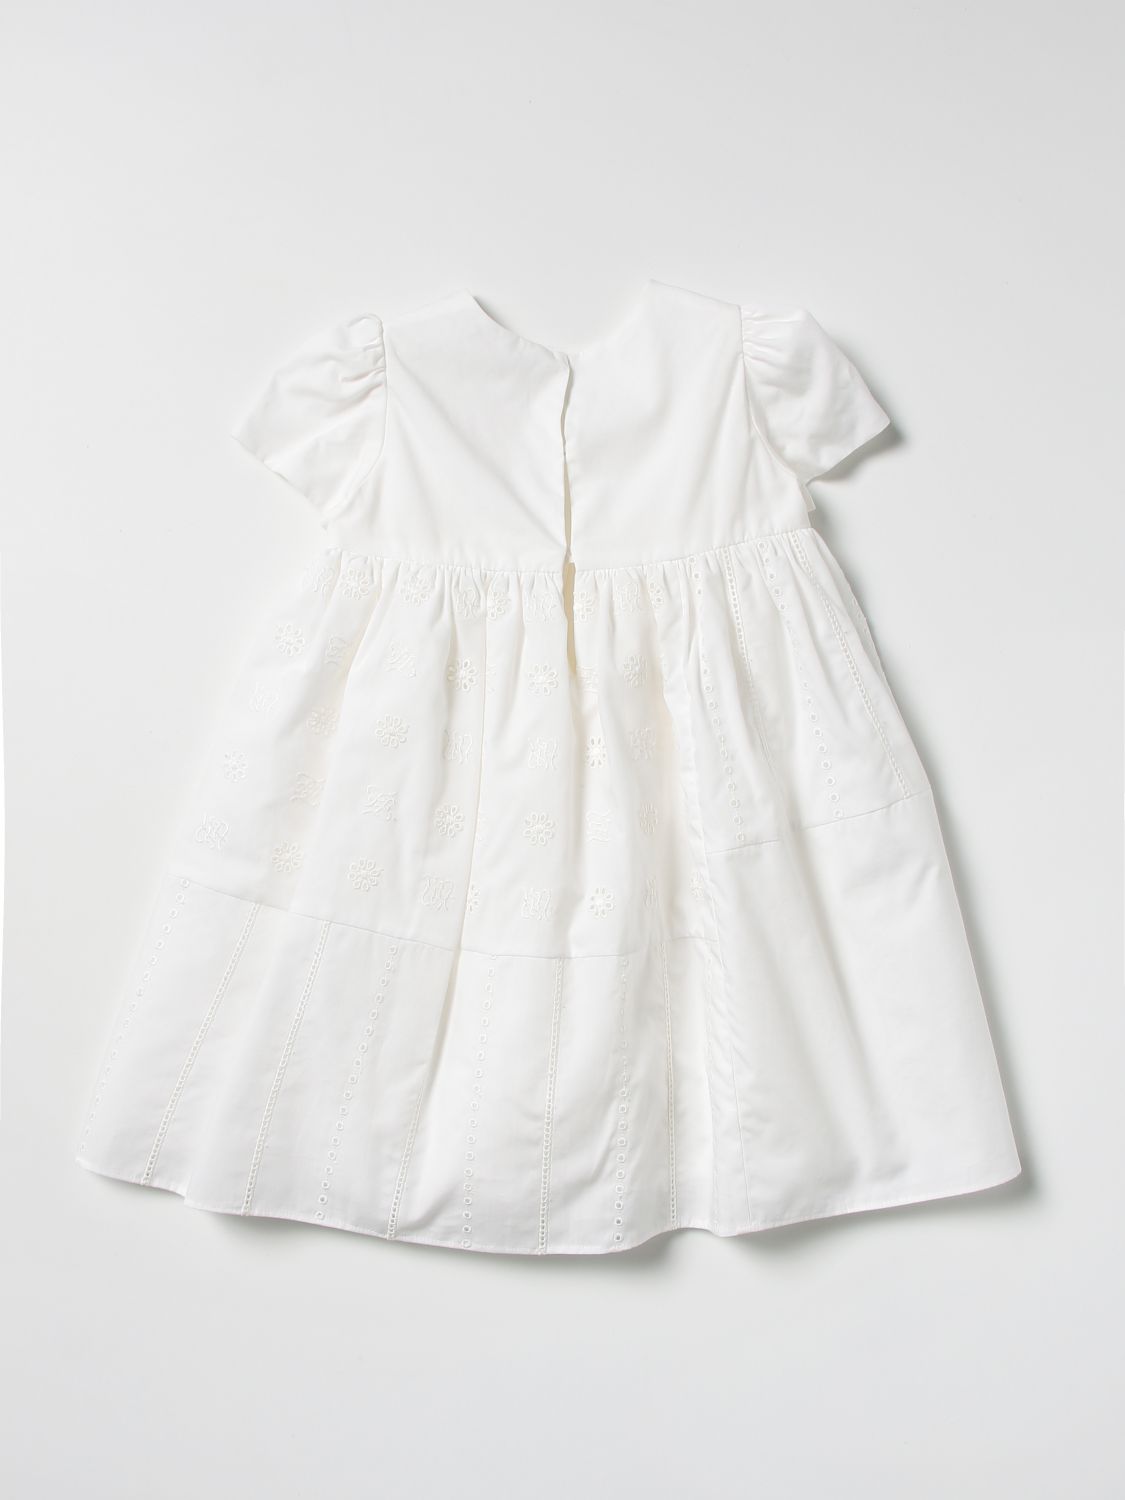 FENDI: jumpsuit for baby - White | Fendi jumpsuit BFB396AJ1C online on ...